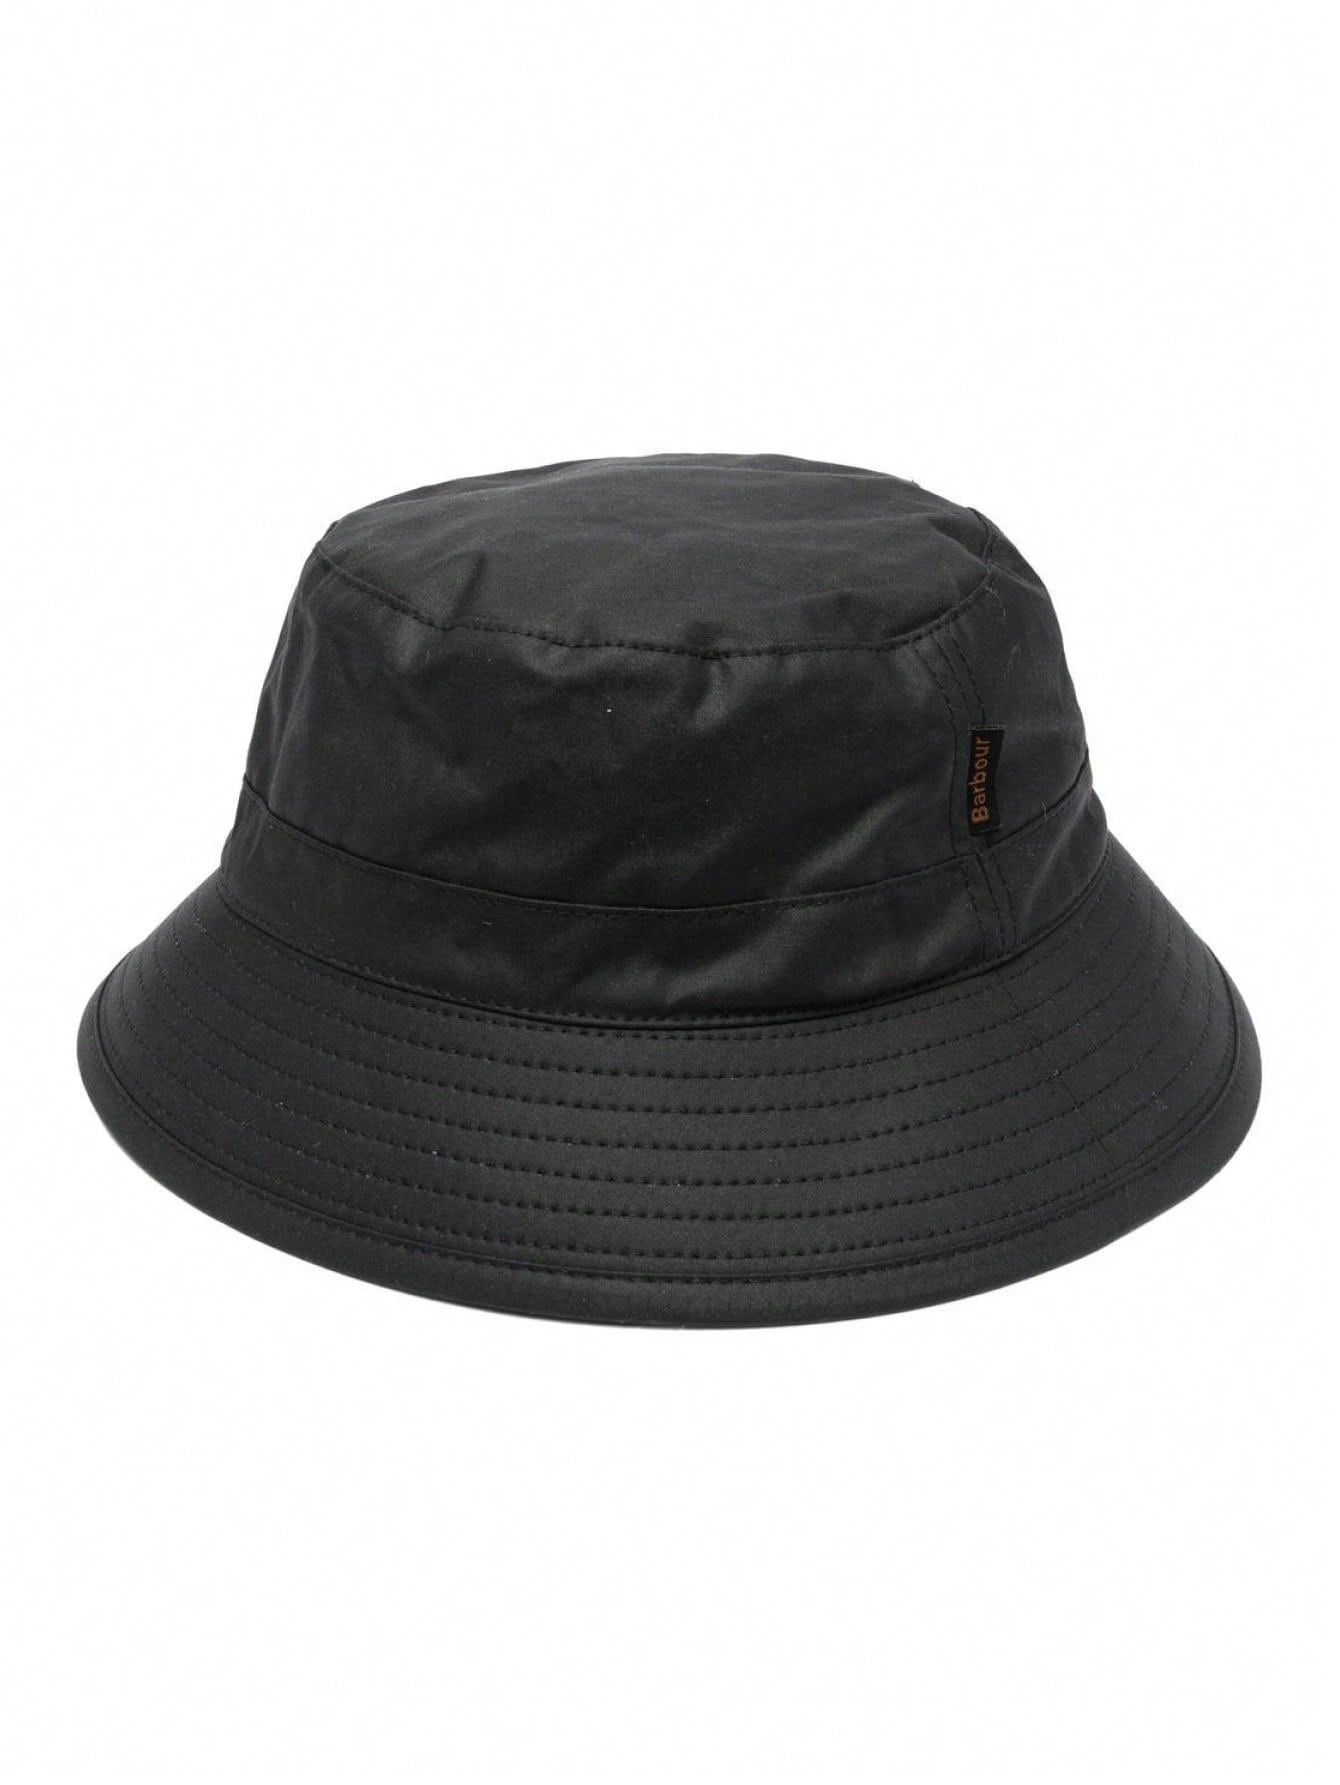 Мужская шапка Barbour ЧЕРНАЯ MHA0001MHABK91-0, черный